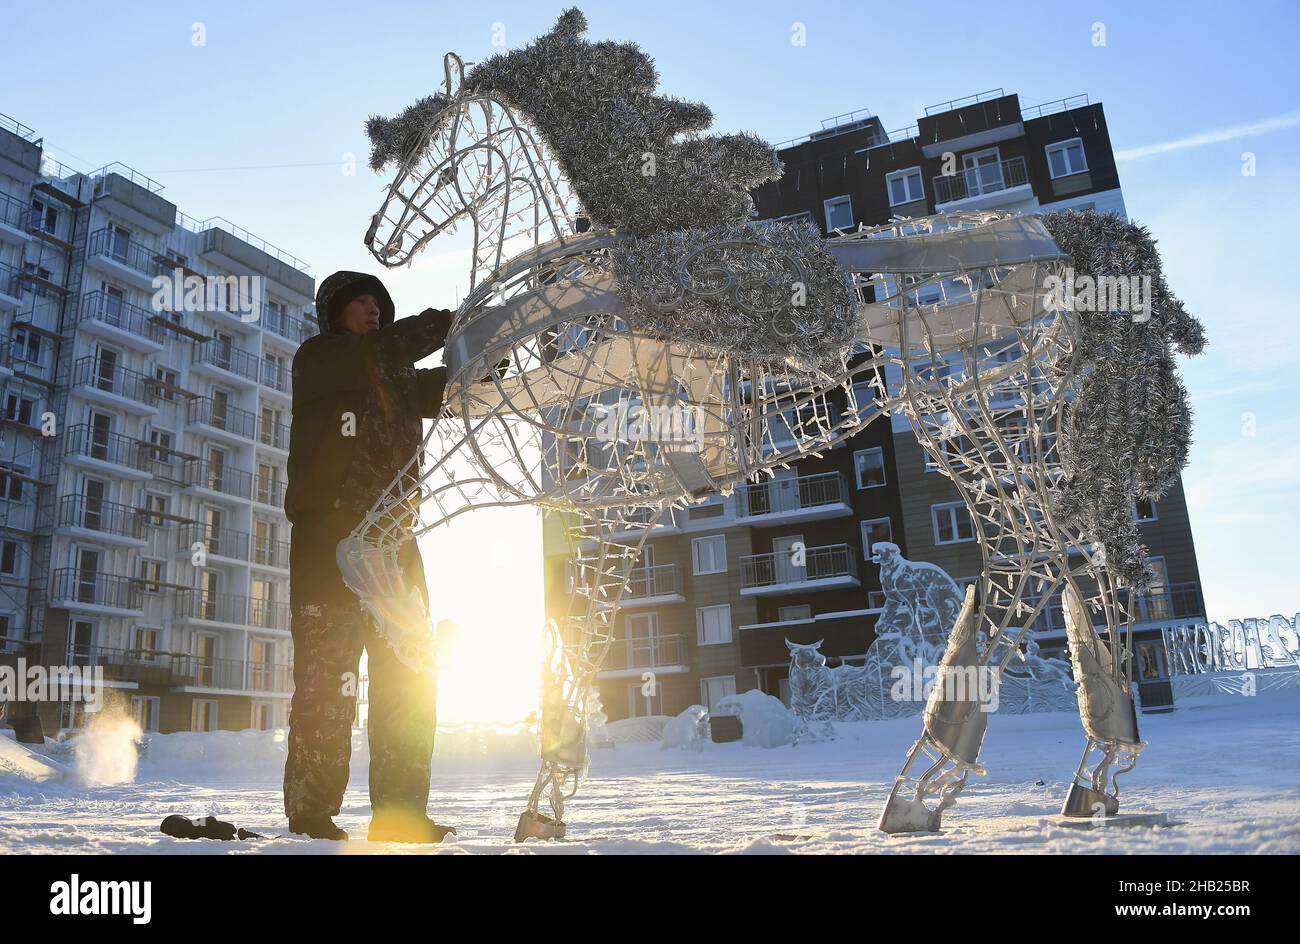 Views of Taishet. Genre photography. New Year's installation 'Horses'. 16.12.2021 Russia, Irkutsk region, Taishet Photo credit: Anatoliy Zhdanov/Kommersant/Sipa USA Stock Photo